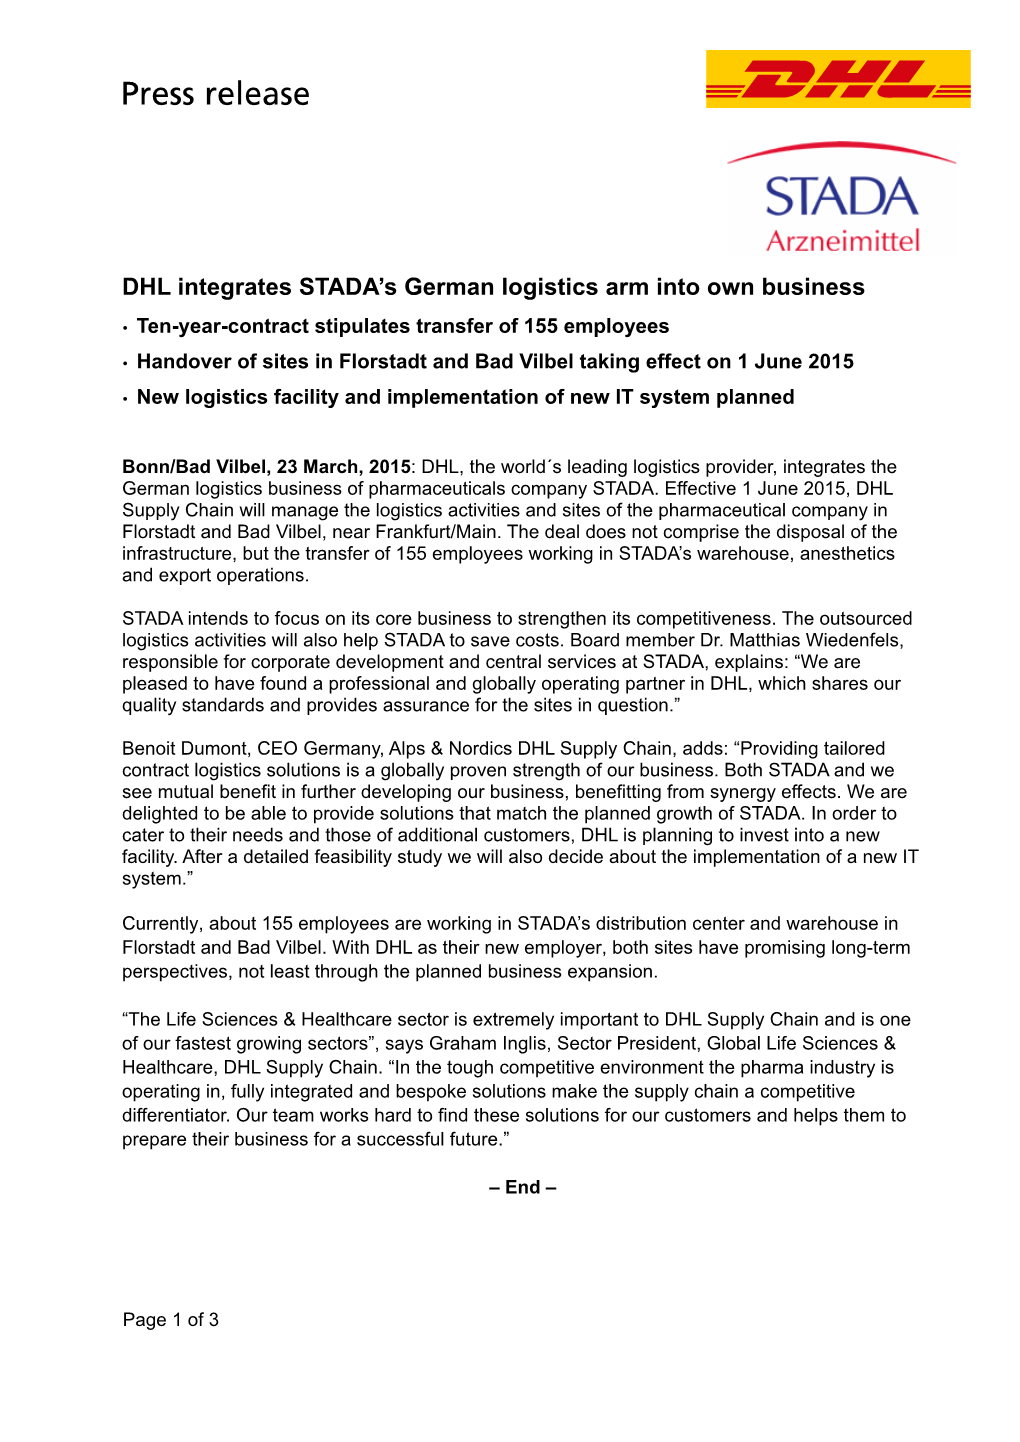 DHL Integrates STADA's German Logistics Arm Into Own Business